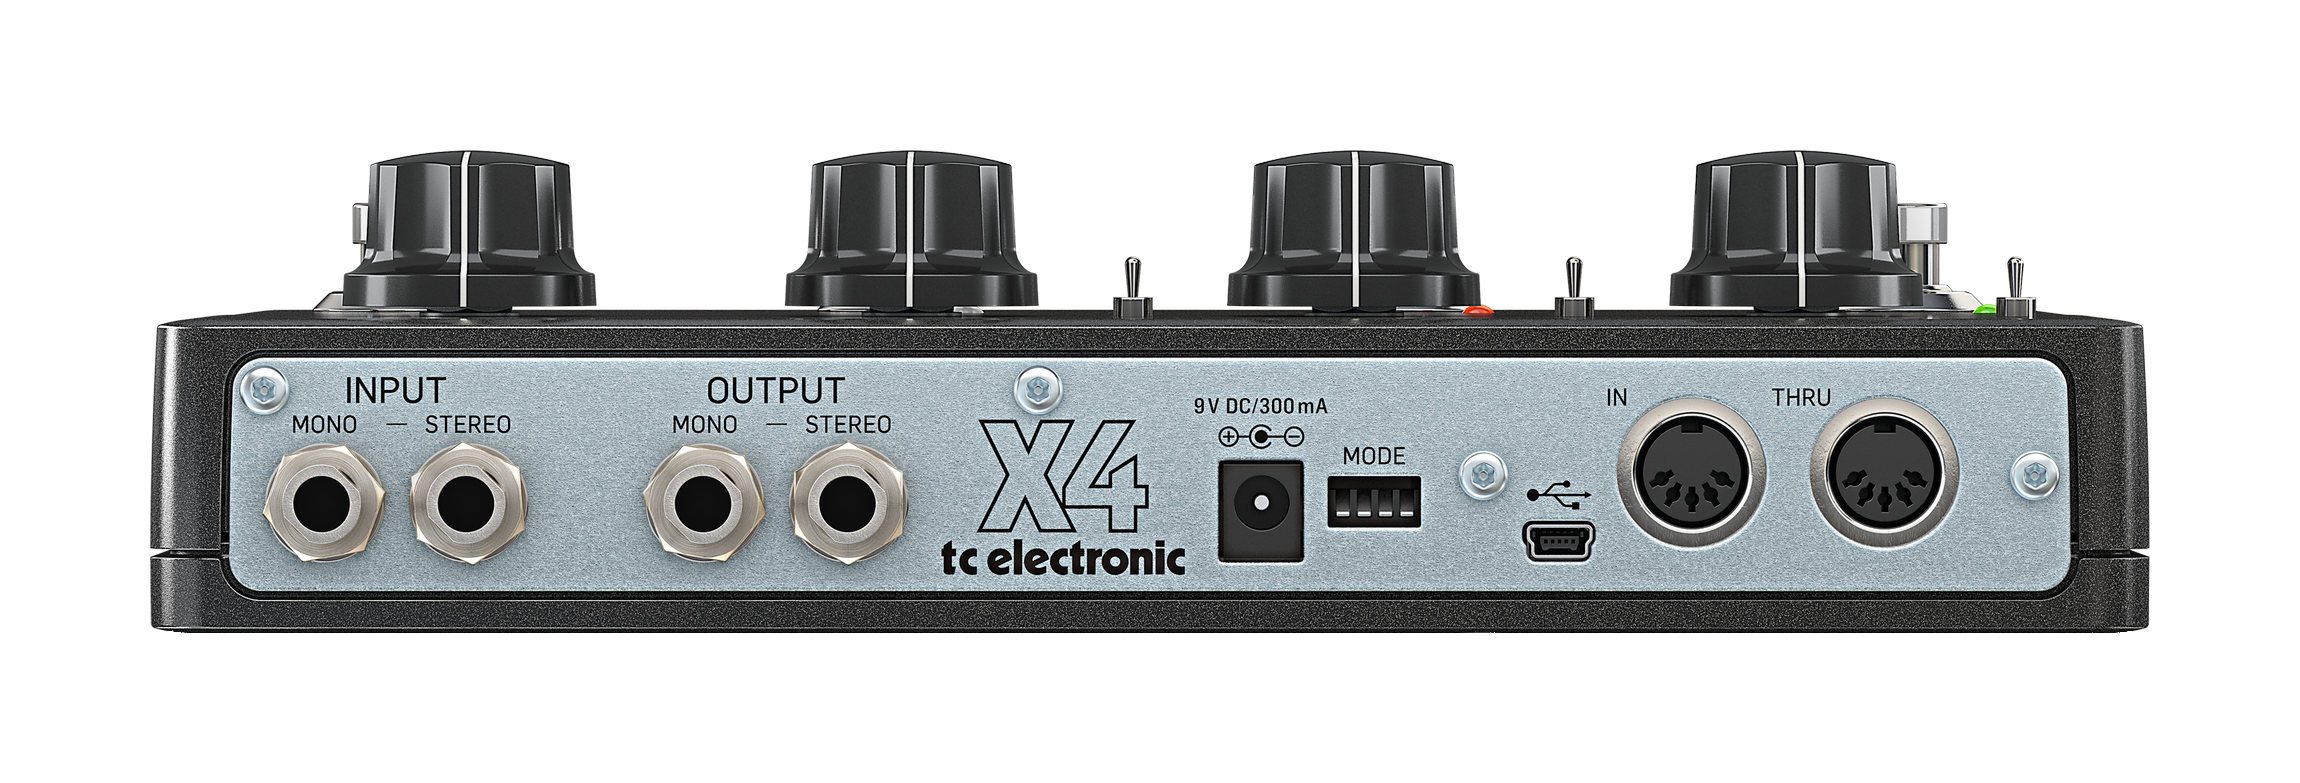 Tc Electronic Ditto X4 Looper